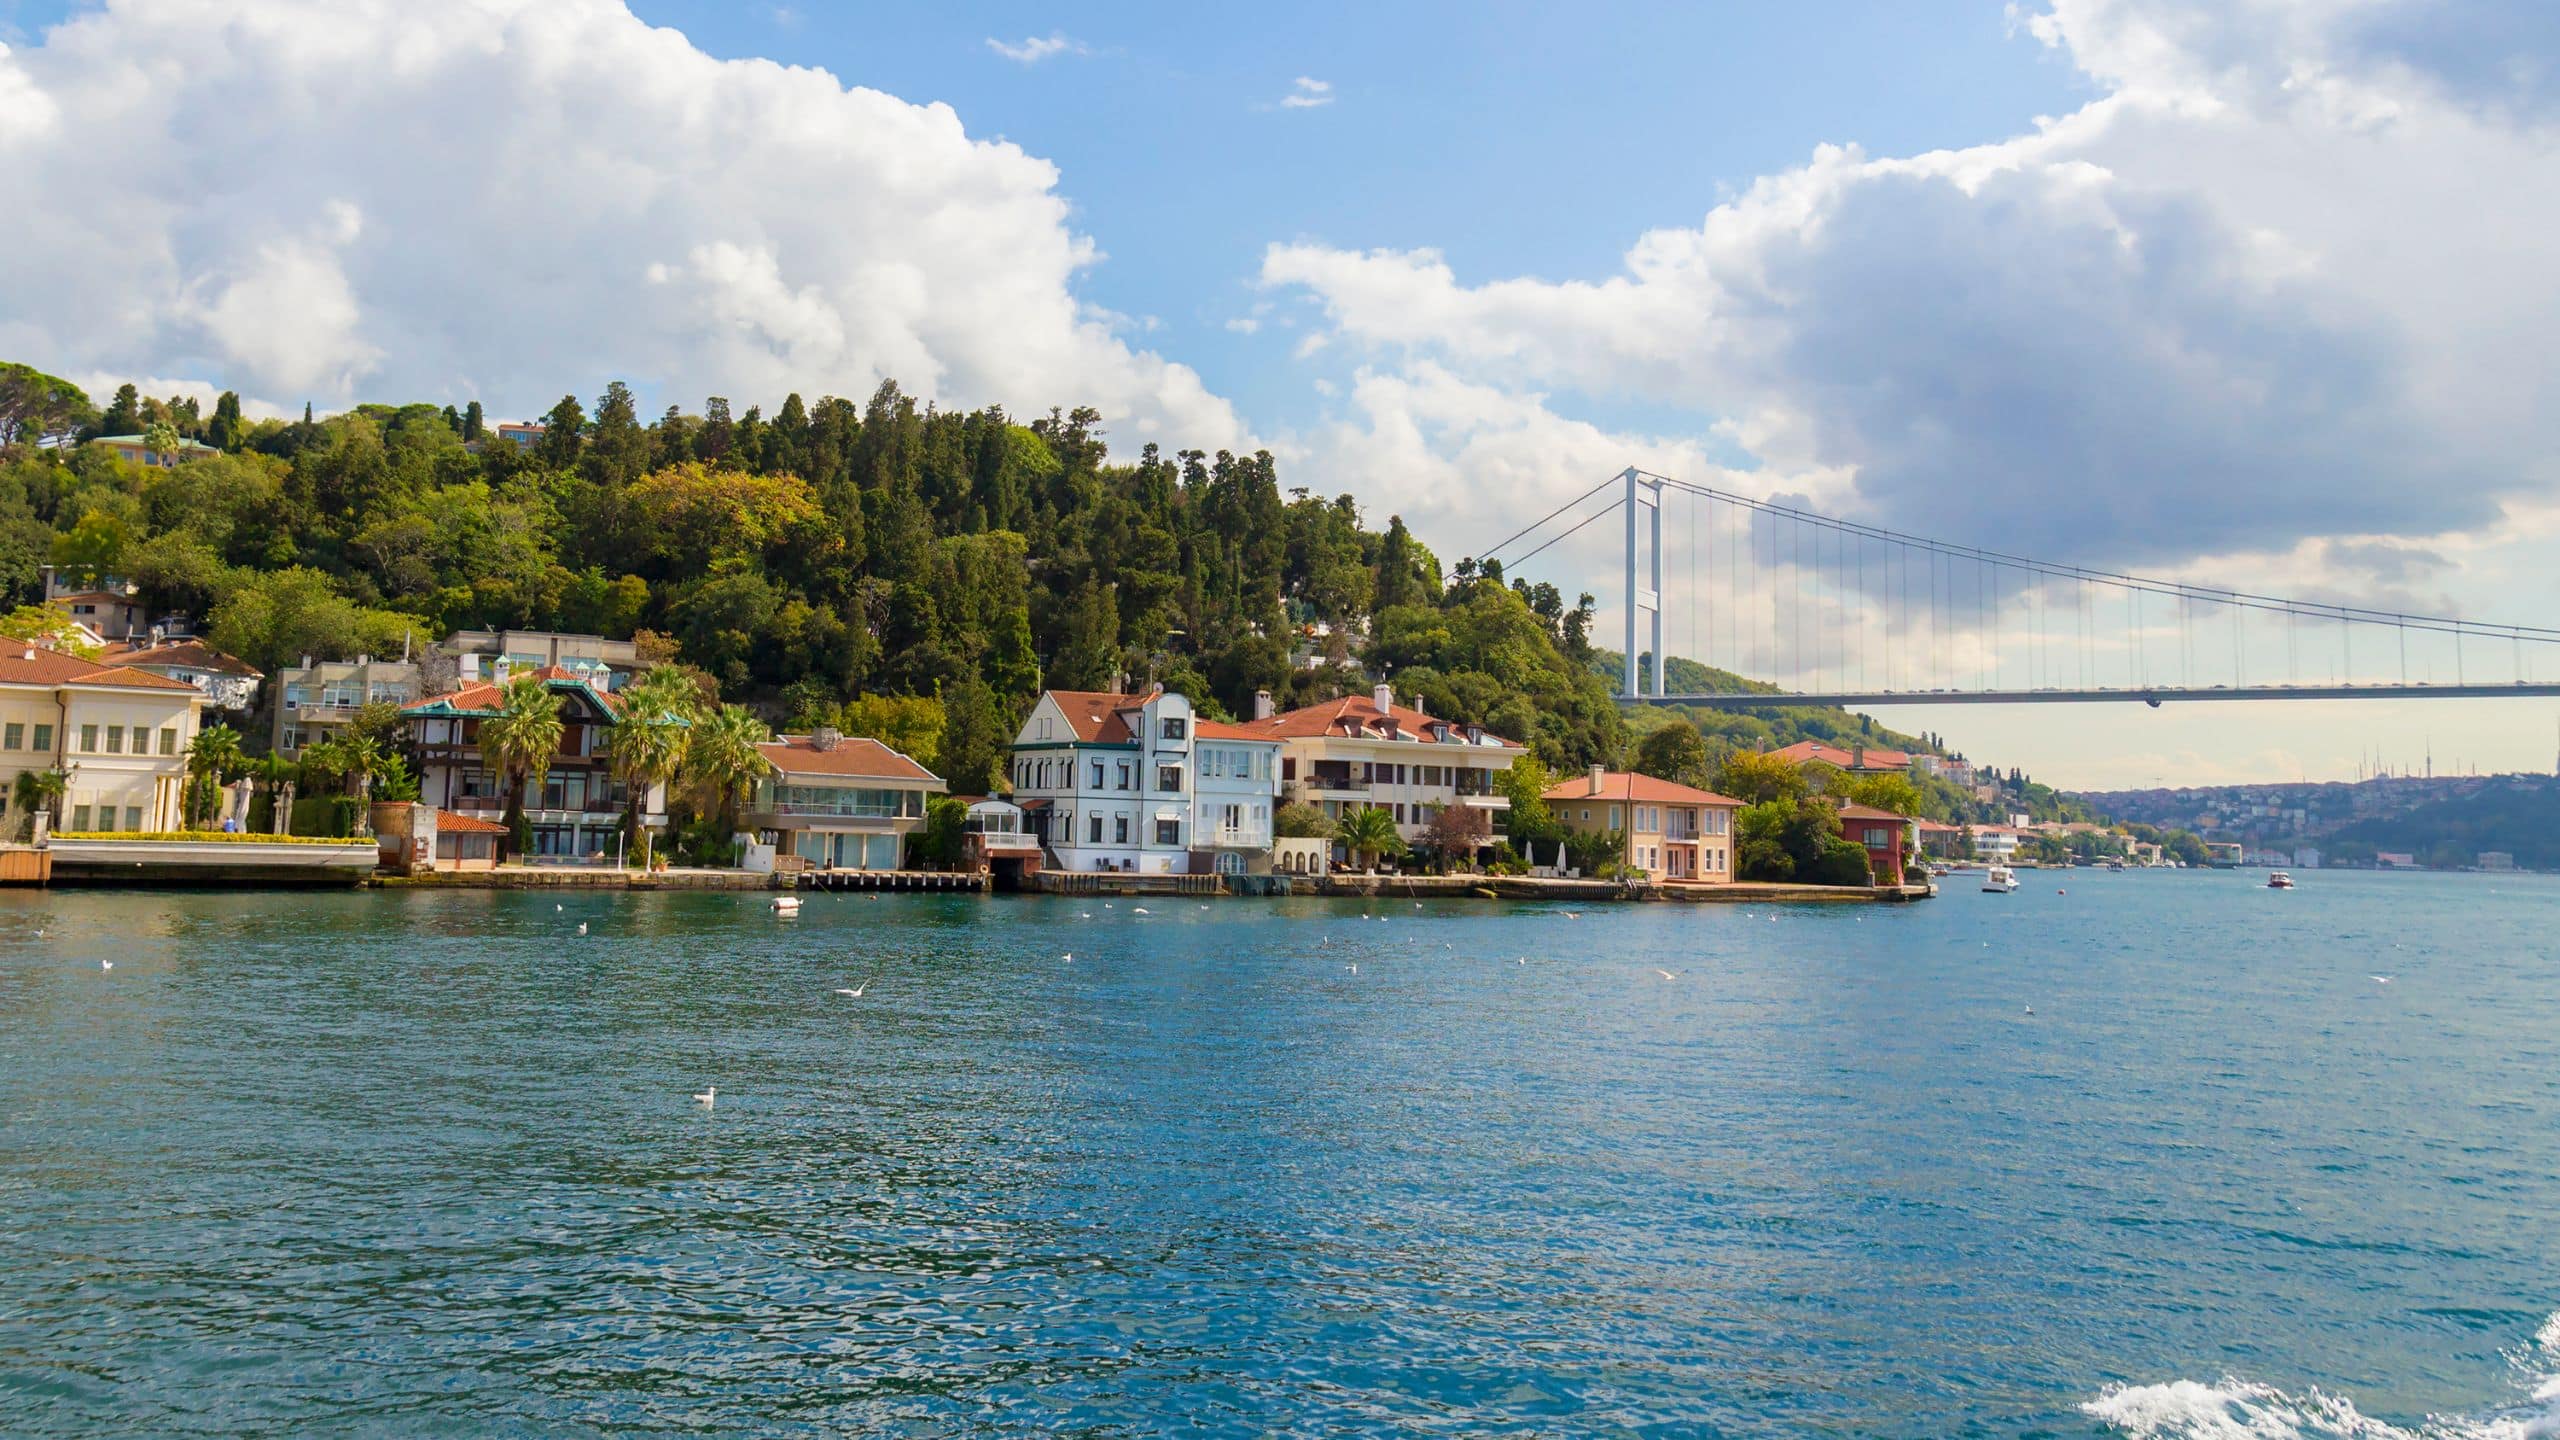 Grand Hyatt Istanbul Bosphorus Waterway Destination